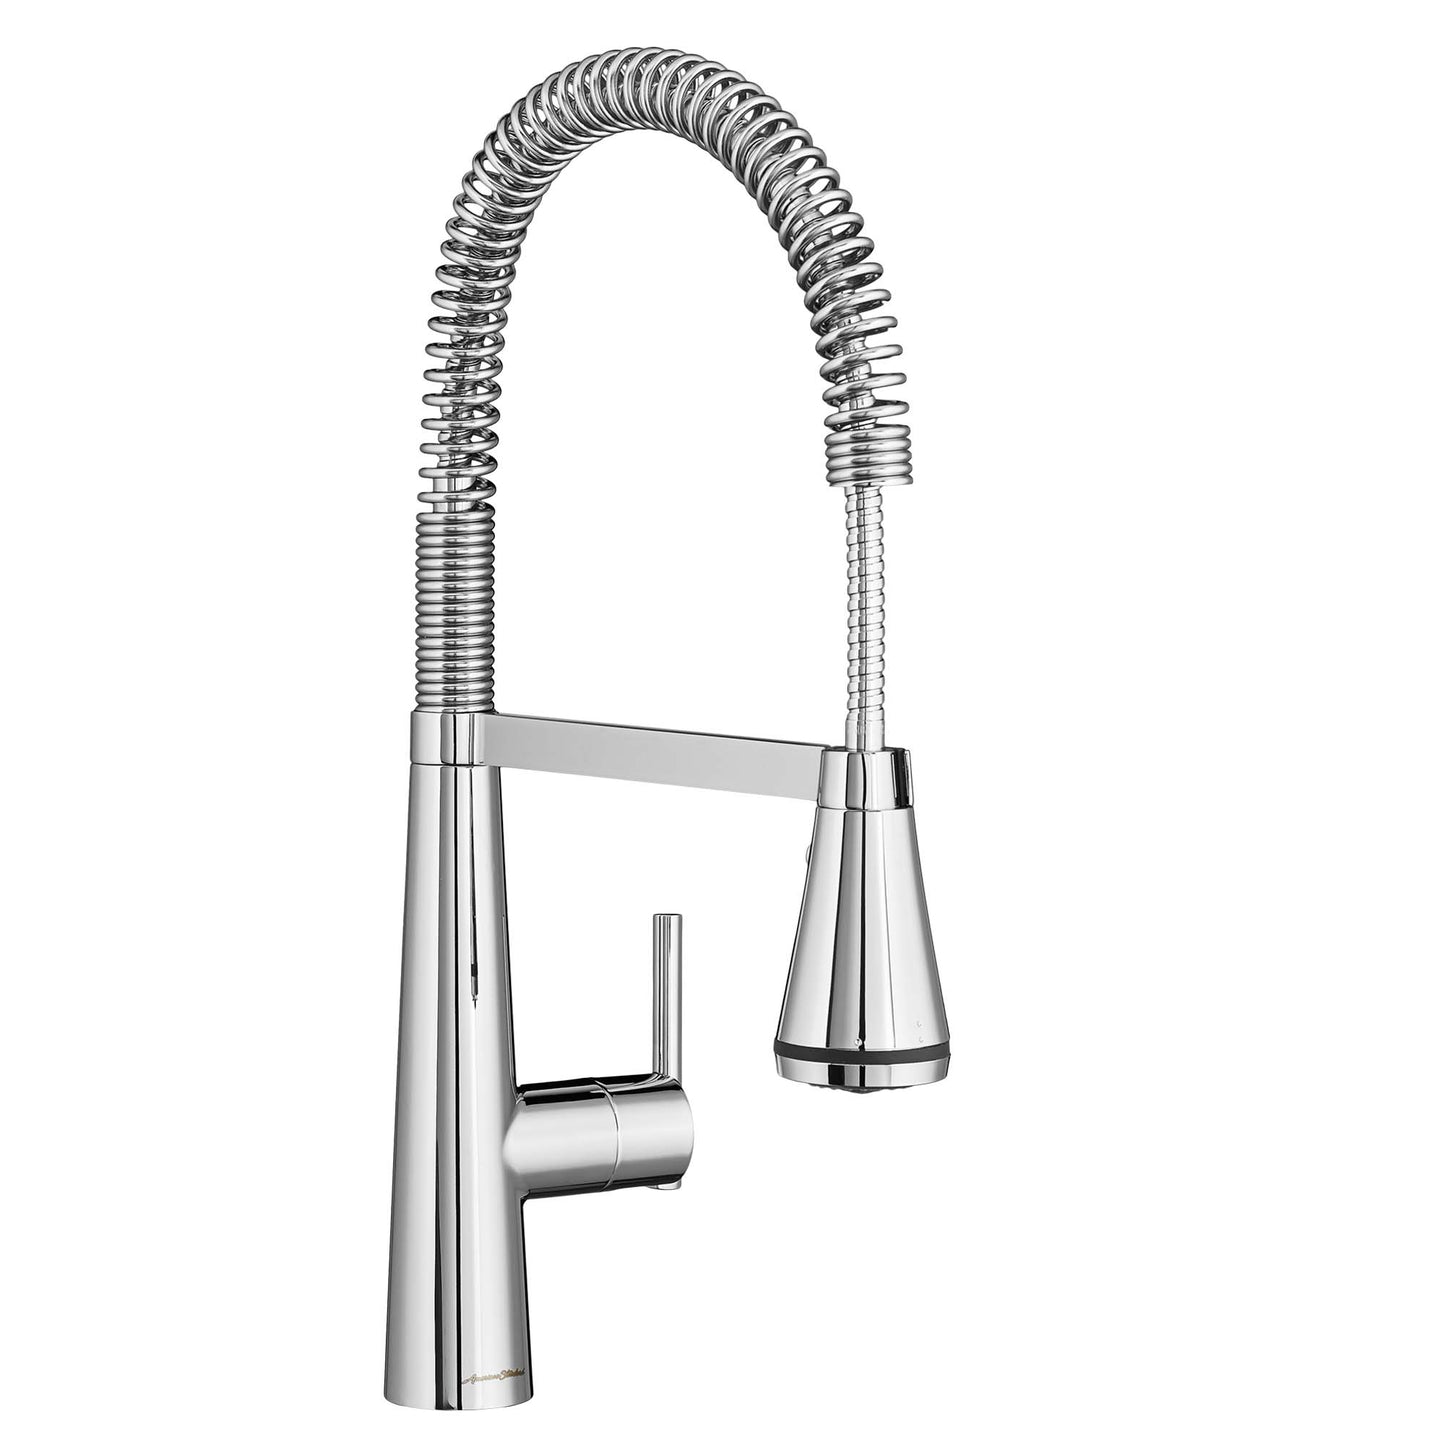 AMERICAN-STANDARD 4932350.002, Edgewater Single-Handle Semi-Pro Multi Spray Kitchen Faucet 1.8 gpm/6.8 L/min in Chrome